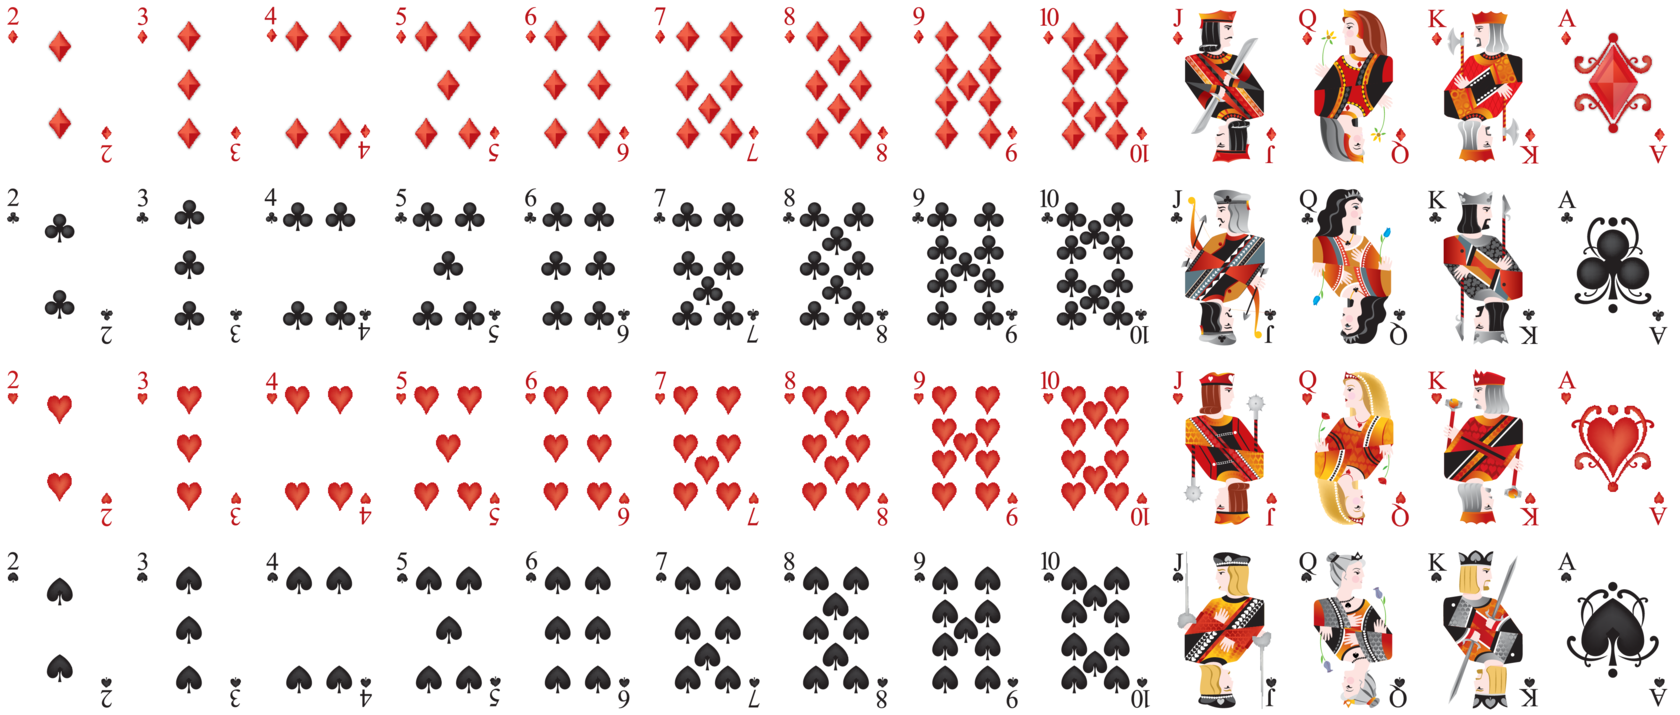 Покер колода 52 карты. Игральные карты Покер колода. Колода карт 52 Poker playing Cards Standard. Колода в 52 карты в холдеме.